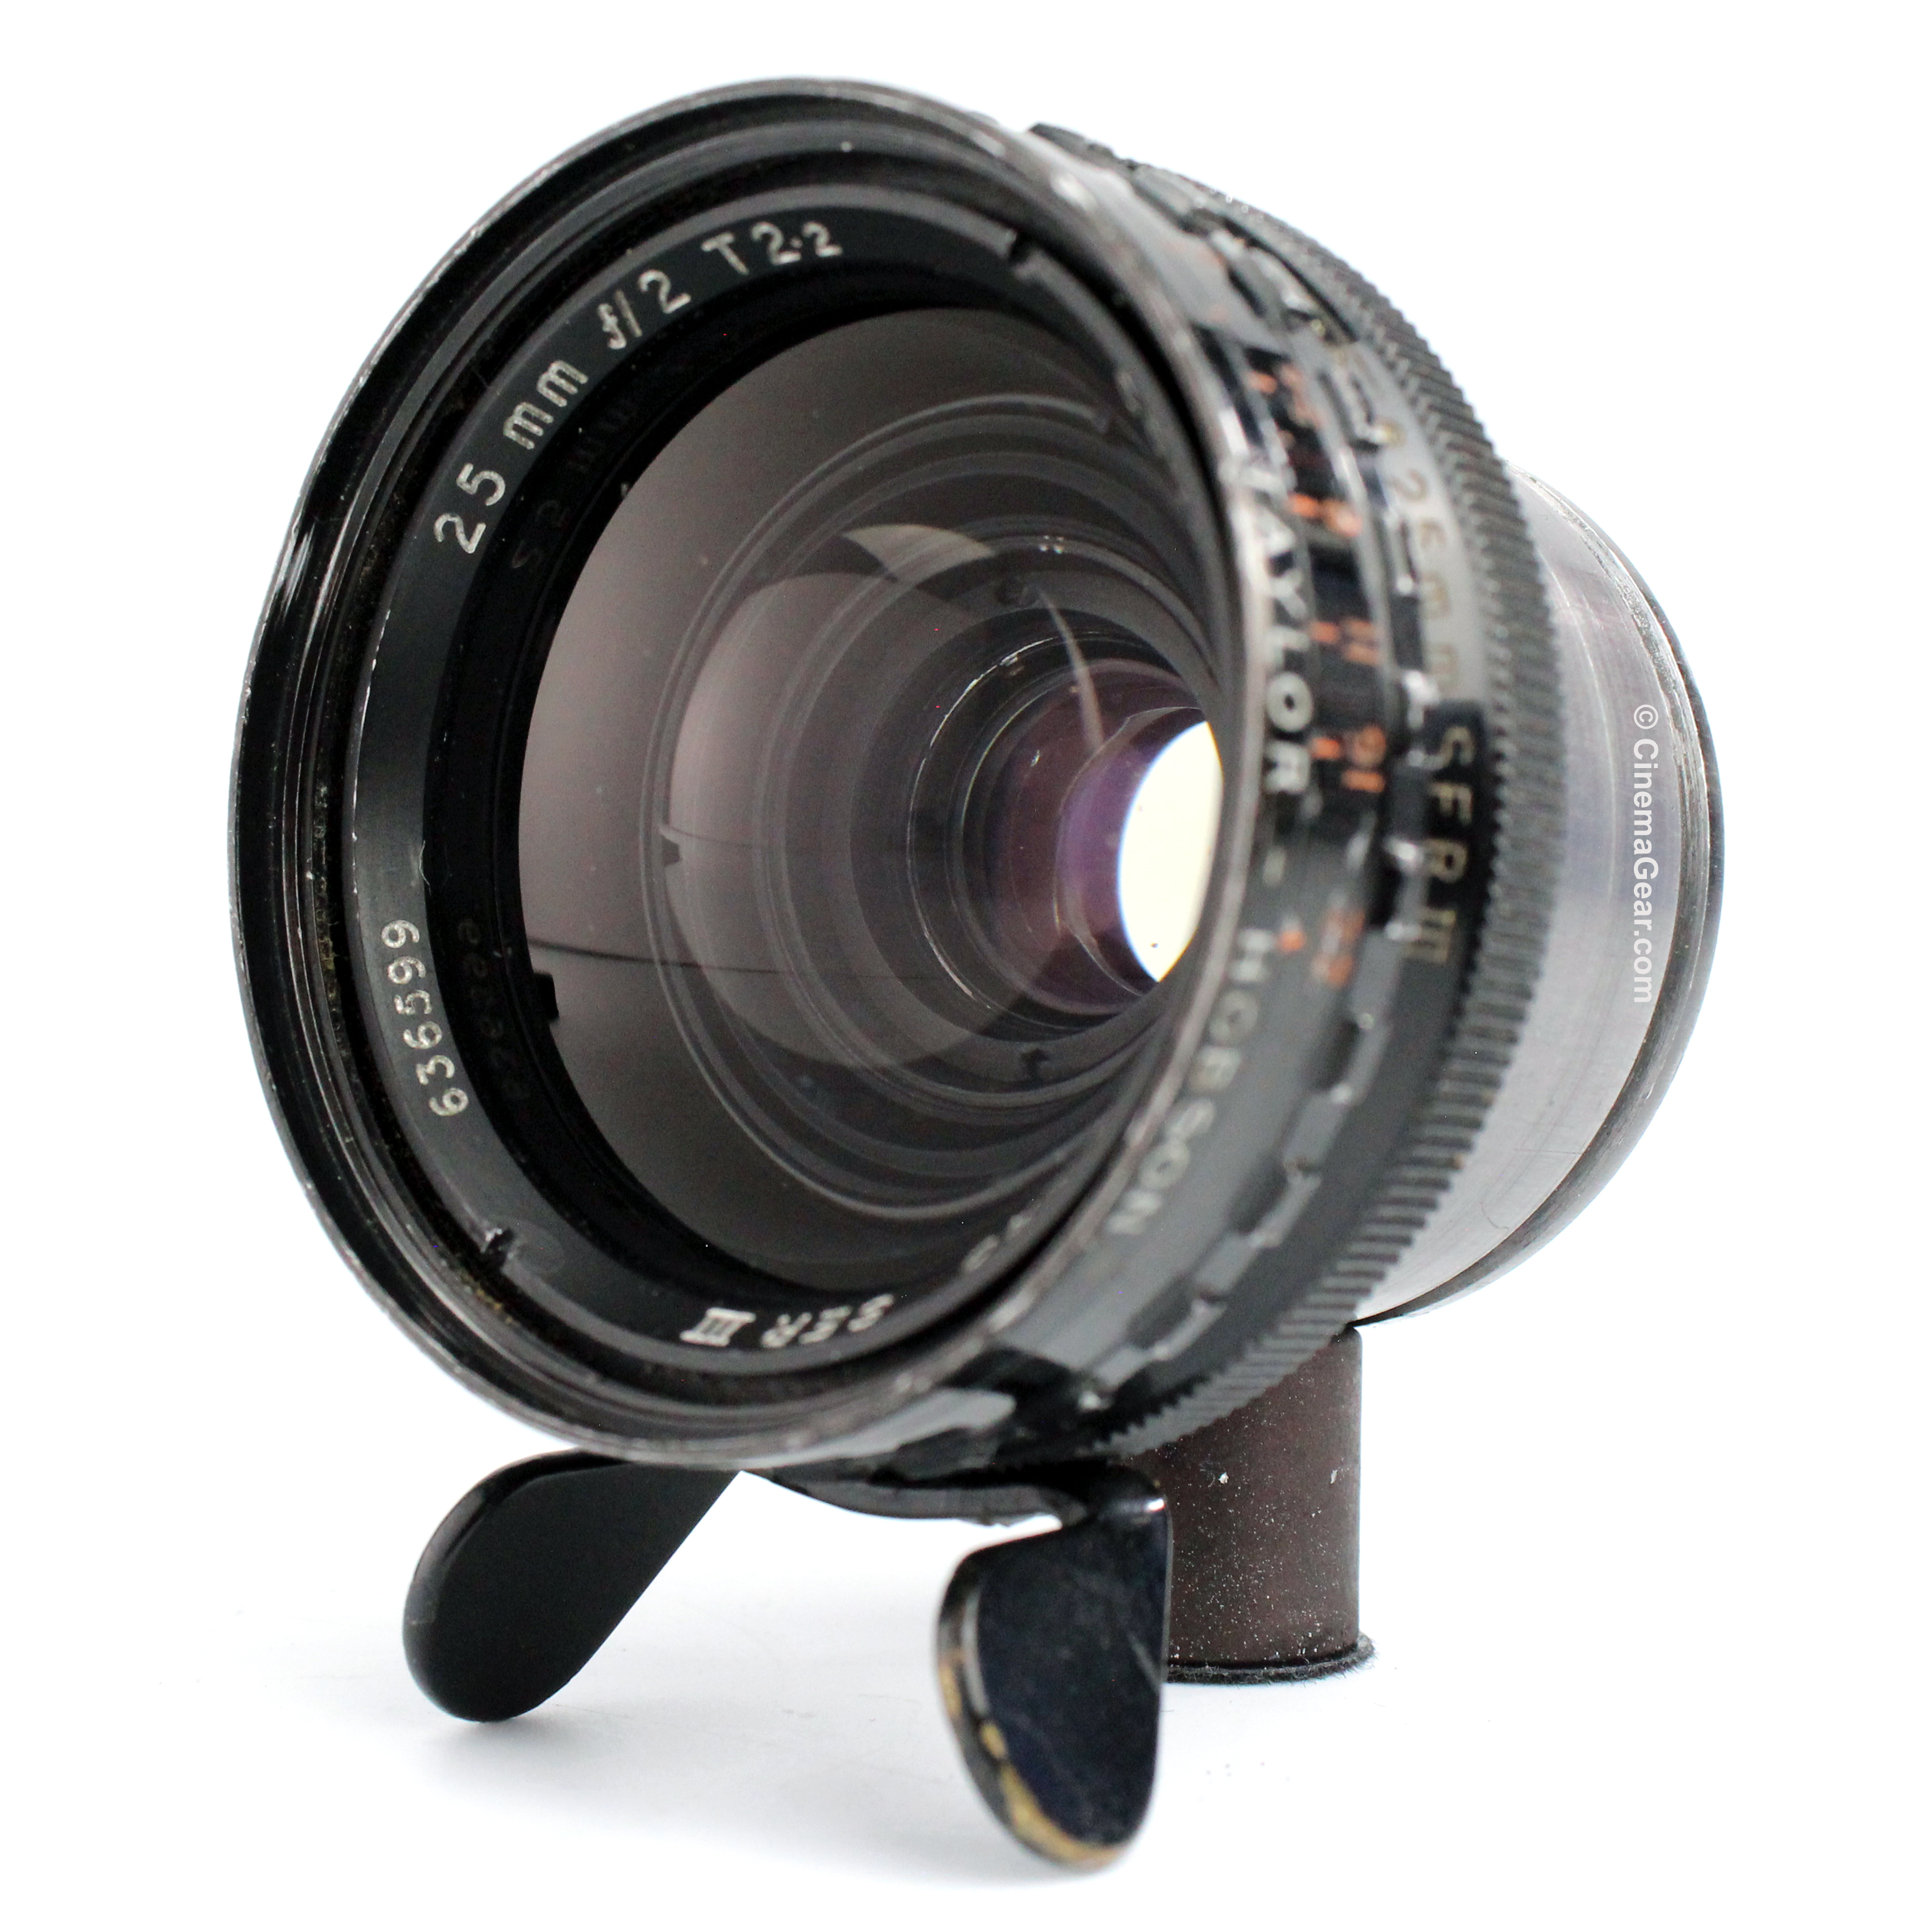 Cooke Speed Panchro Series 3 25mm T2.2 lens in Arriflex Standard mount.